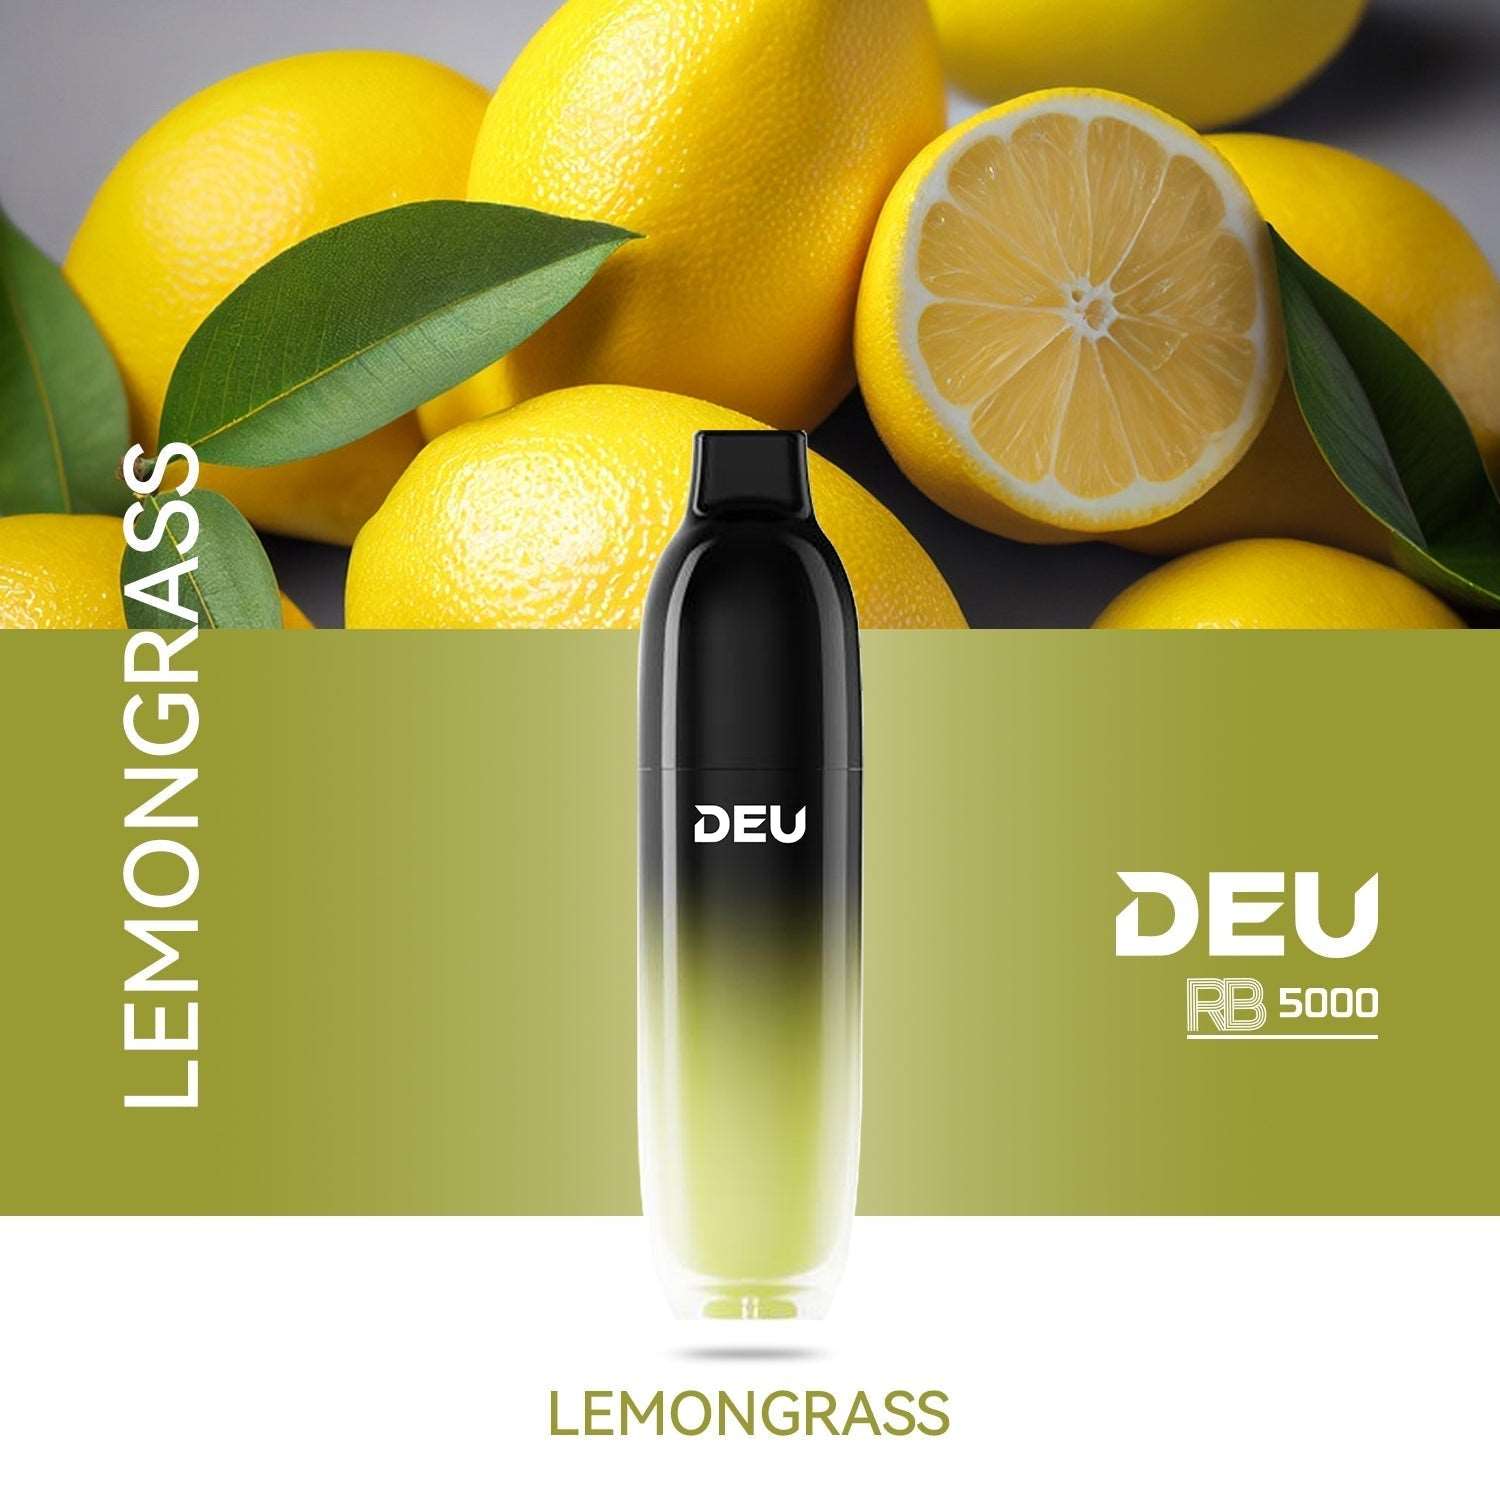 DEU RB5000 - Lemongrass